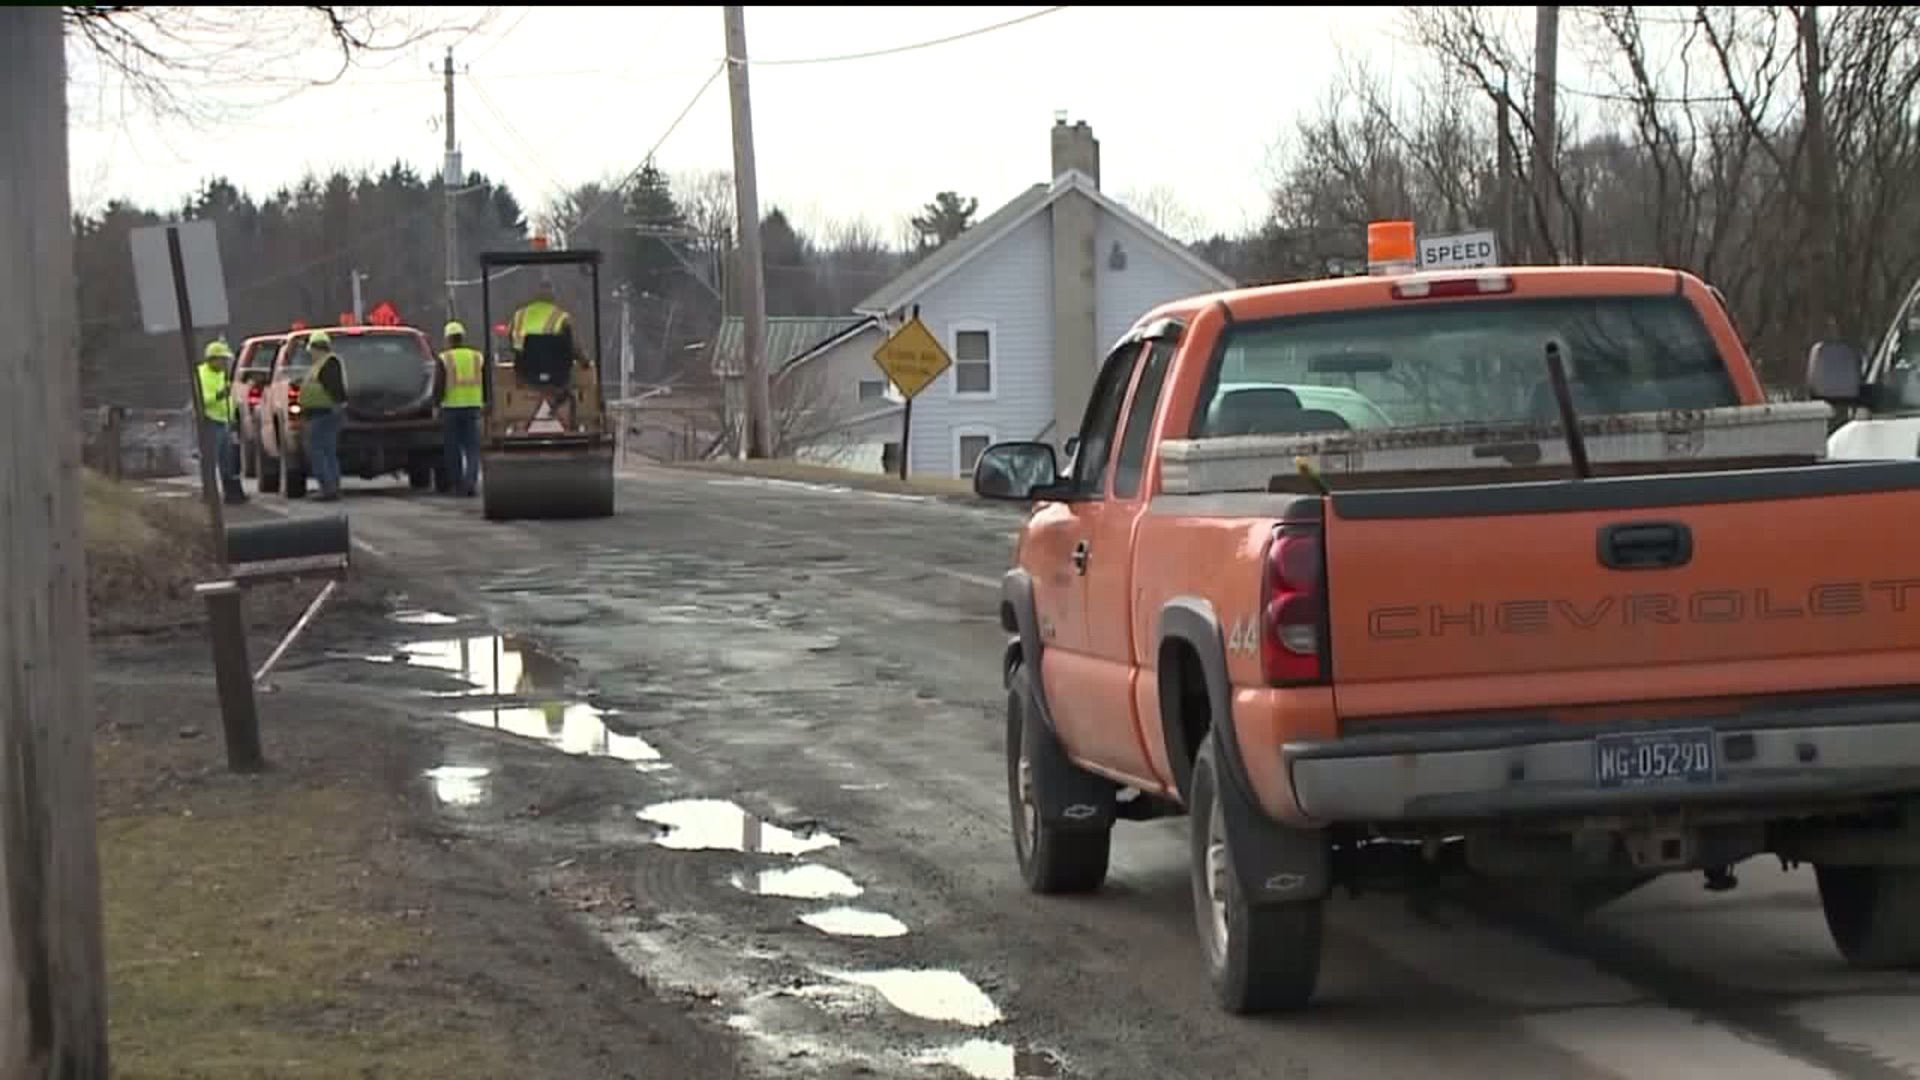 Neighbors Make GoFundMe Page to Raise Money for County to Fix Potholes